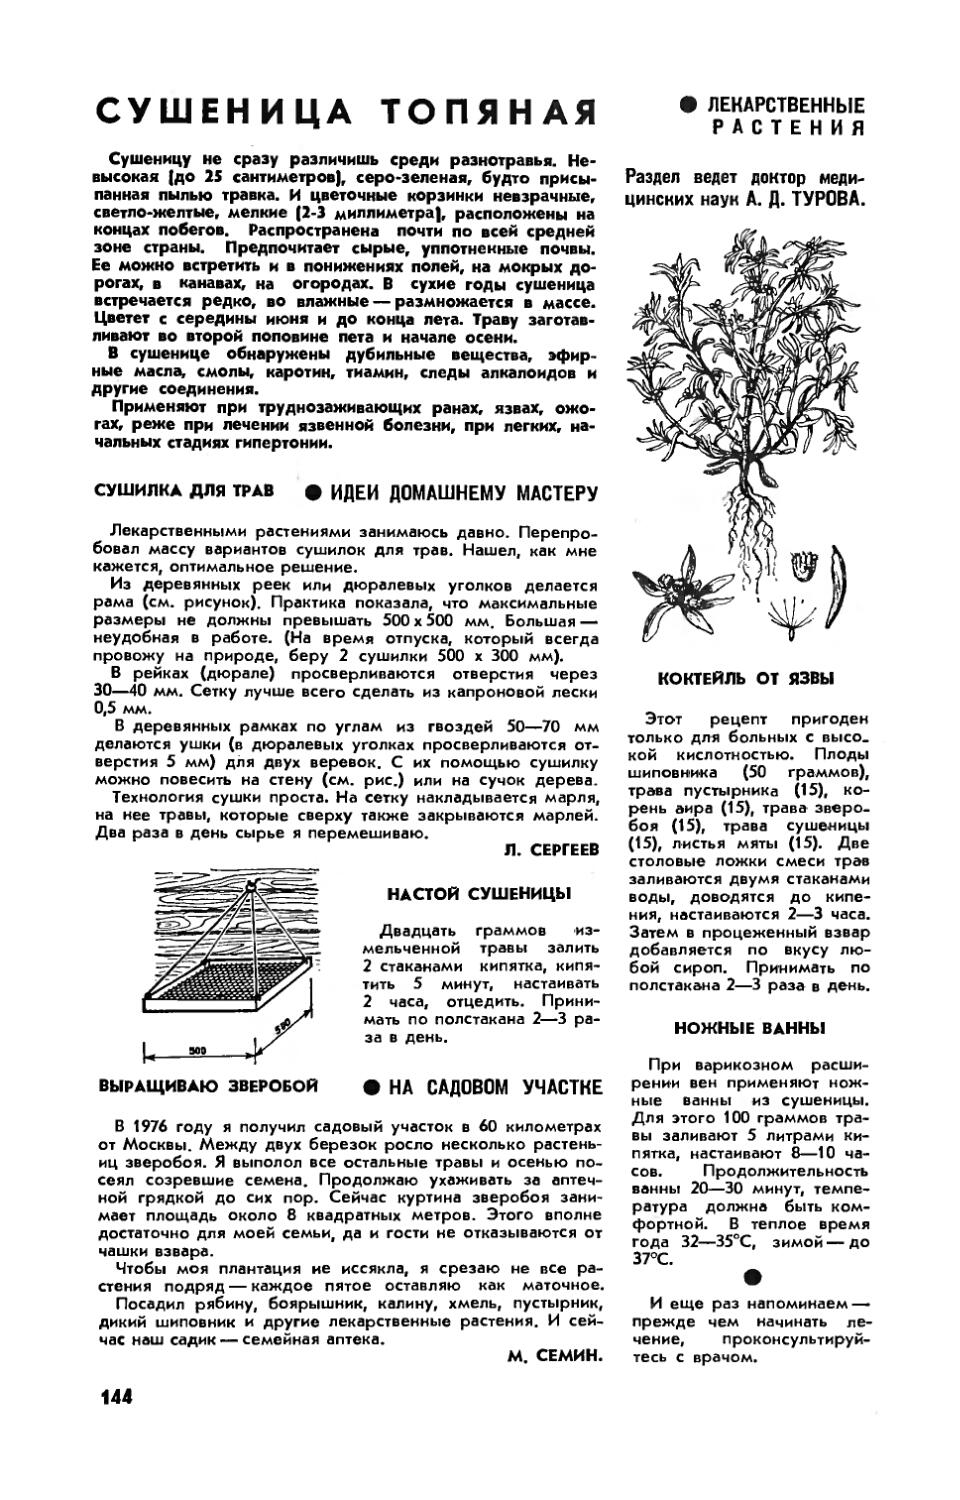 А. ТУРОВА, докт. мед. наук — Сушеница топяная